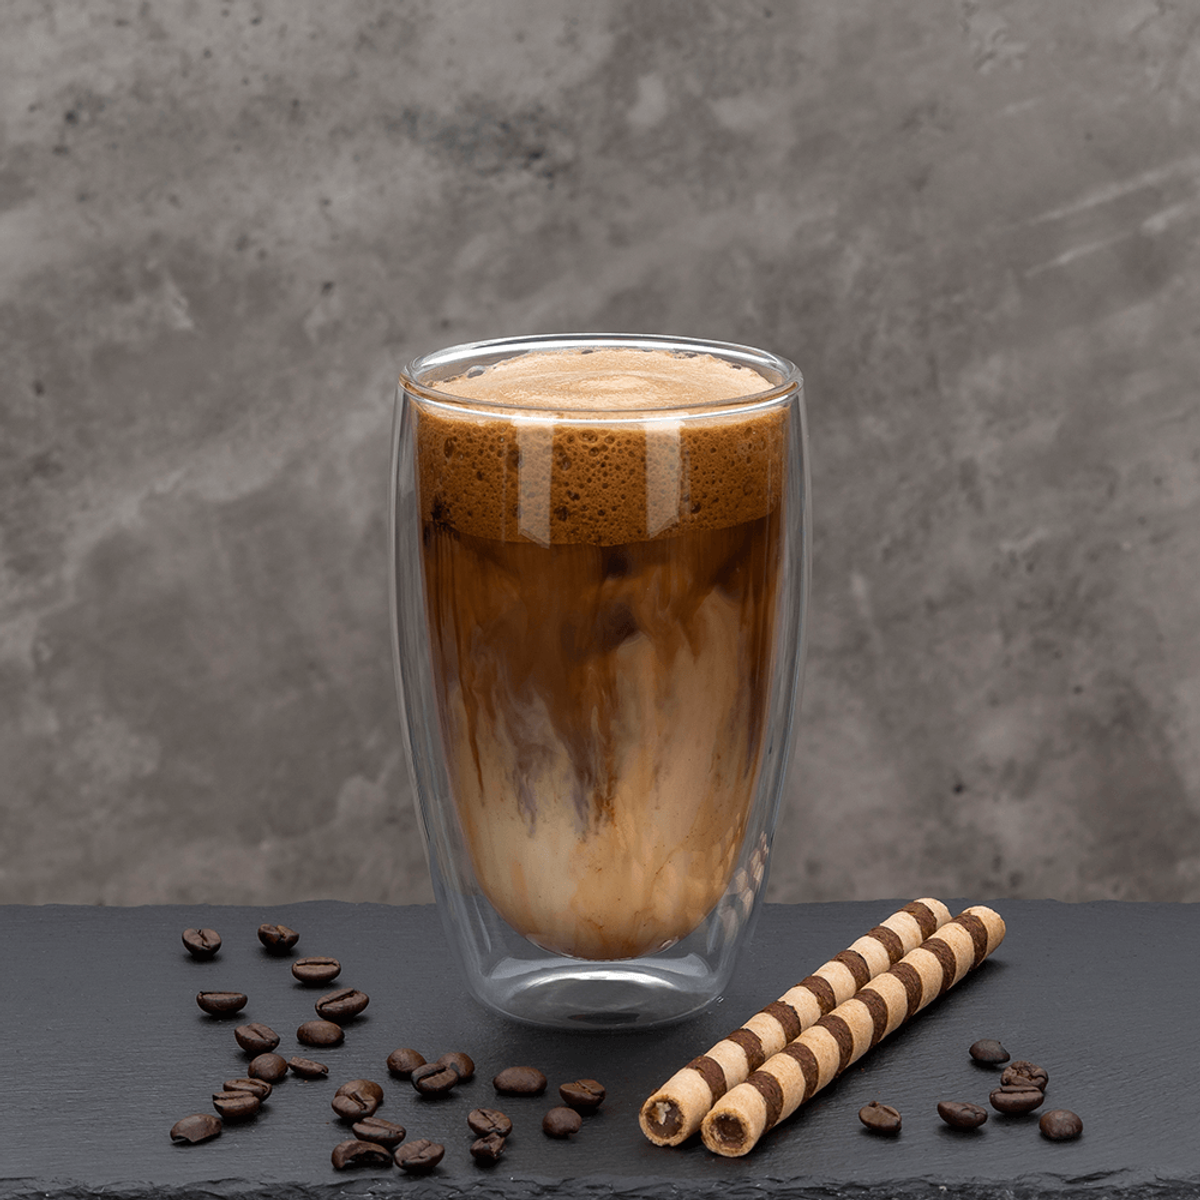 Flavored caffe latte